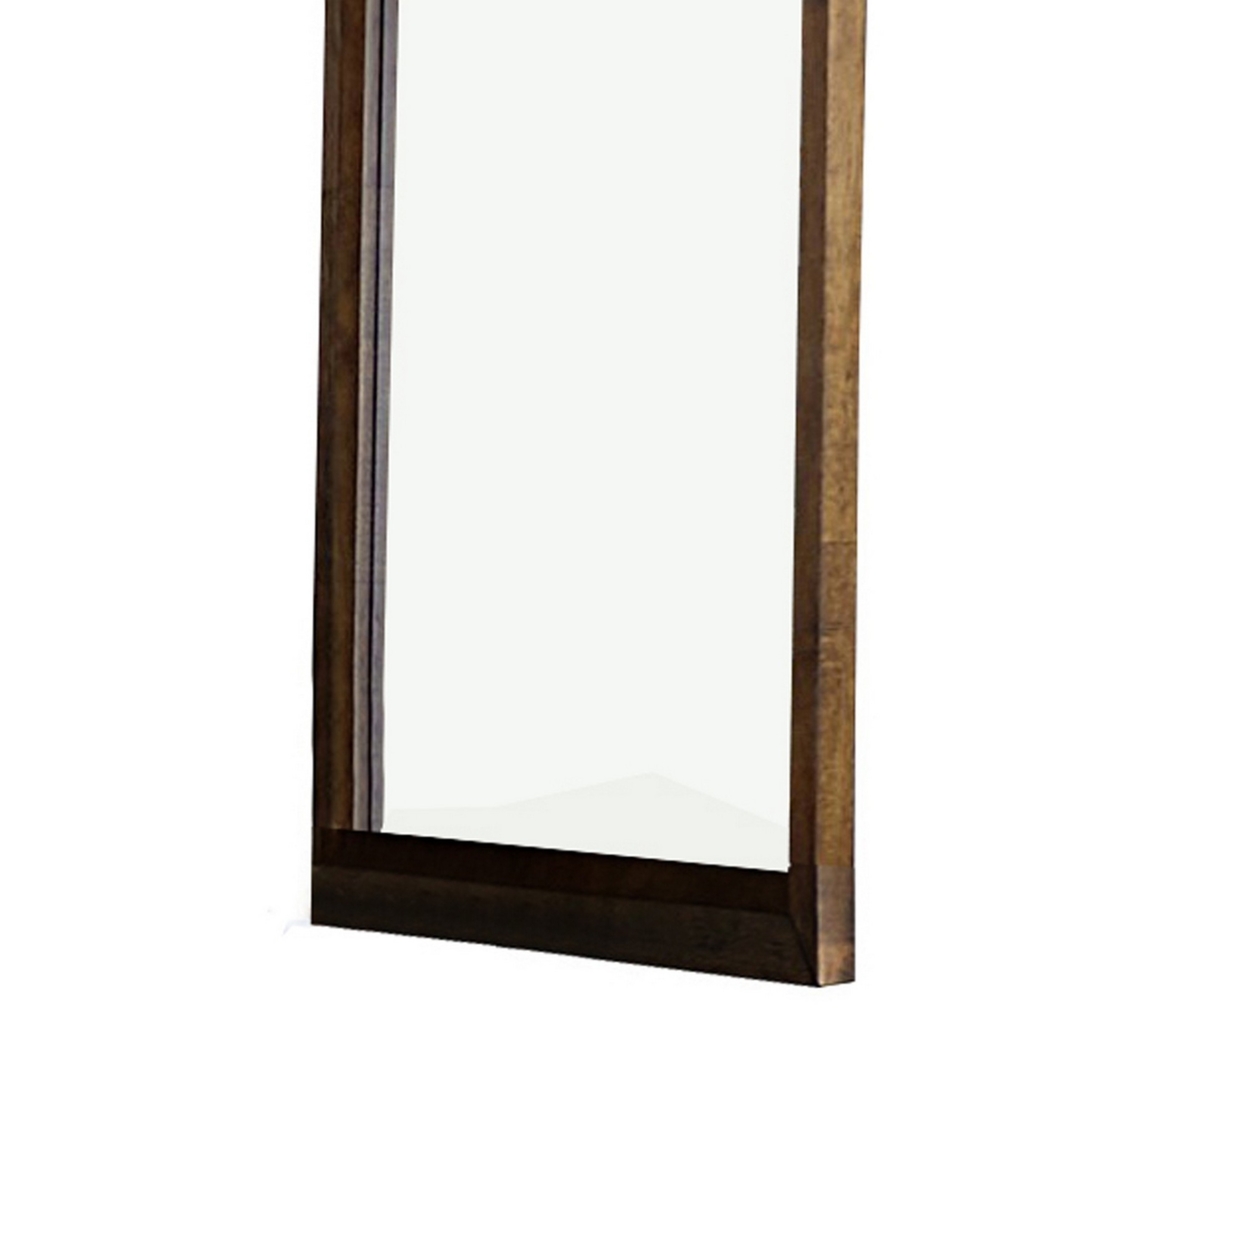 Transitional Rectangular Wooden Frame Mirror With Grain Details, Brown- Saltoro Sherpi